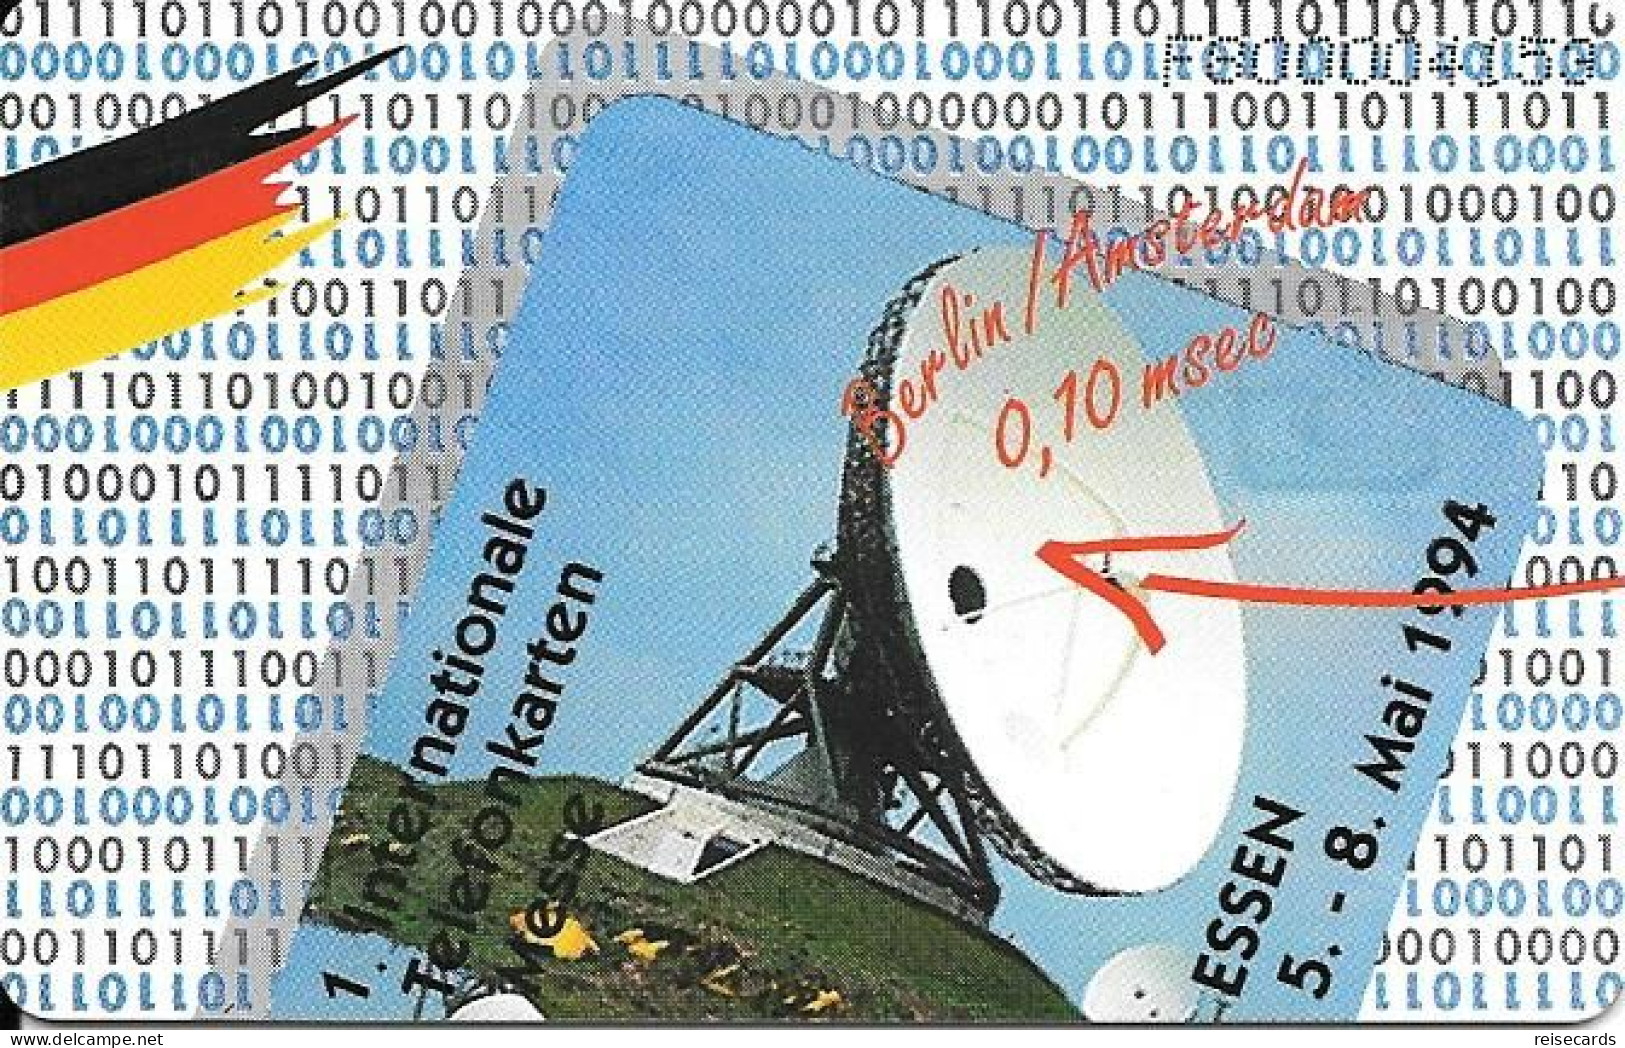 Netherlands: Ptt Telecom - 1994 1. Internationale Telefoonkaarten Beurs 94 Essen. Mint - öffentlich